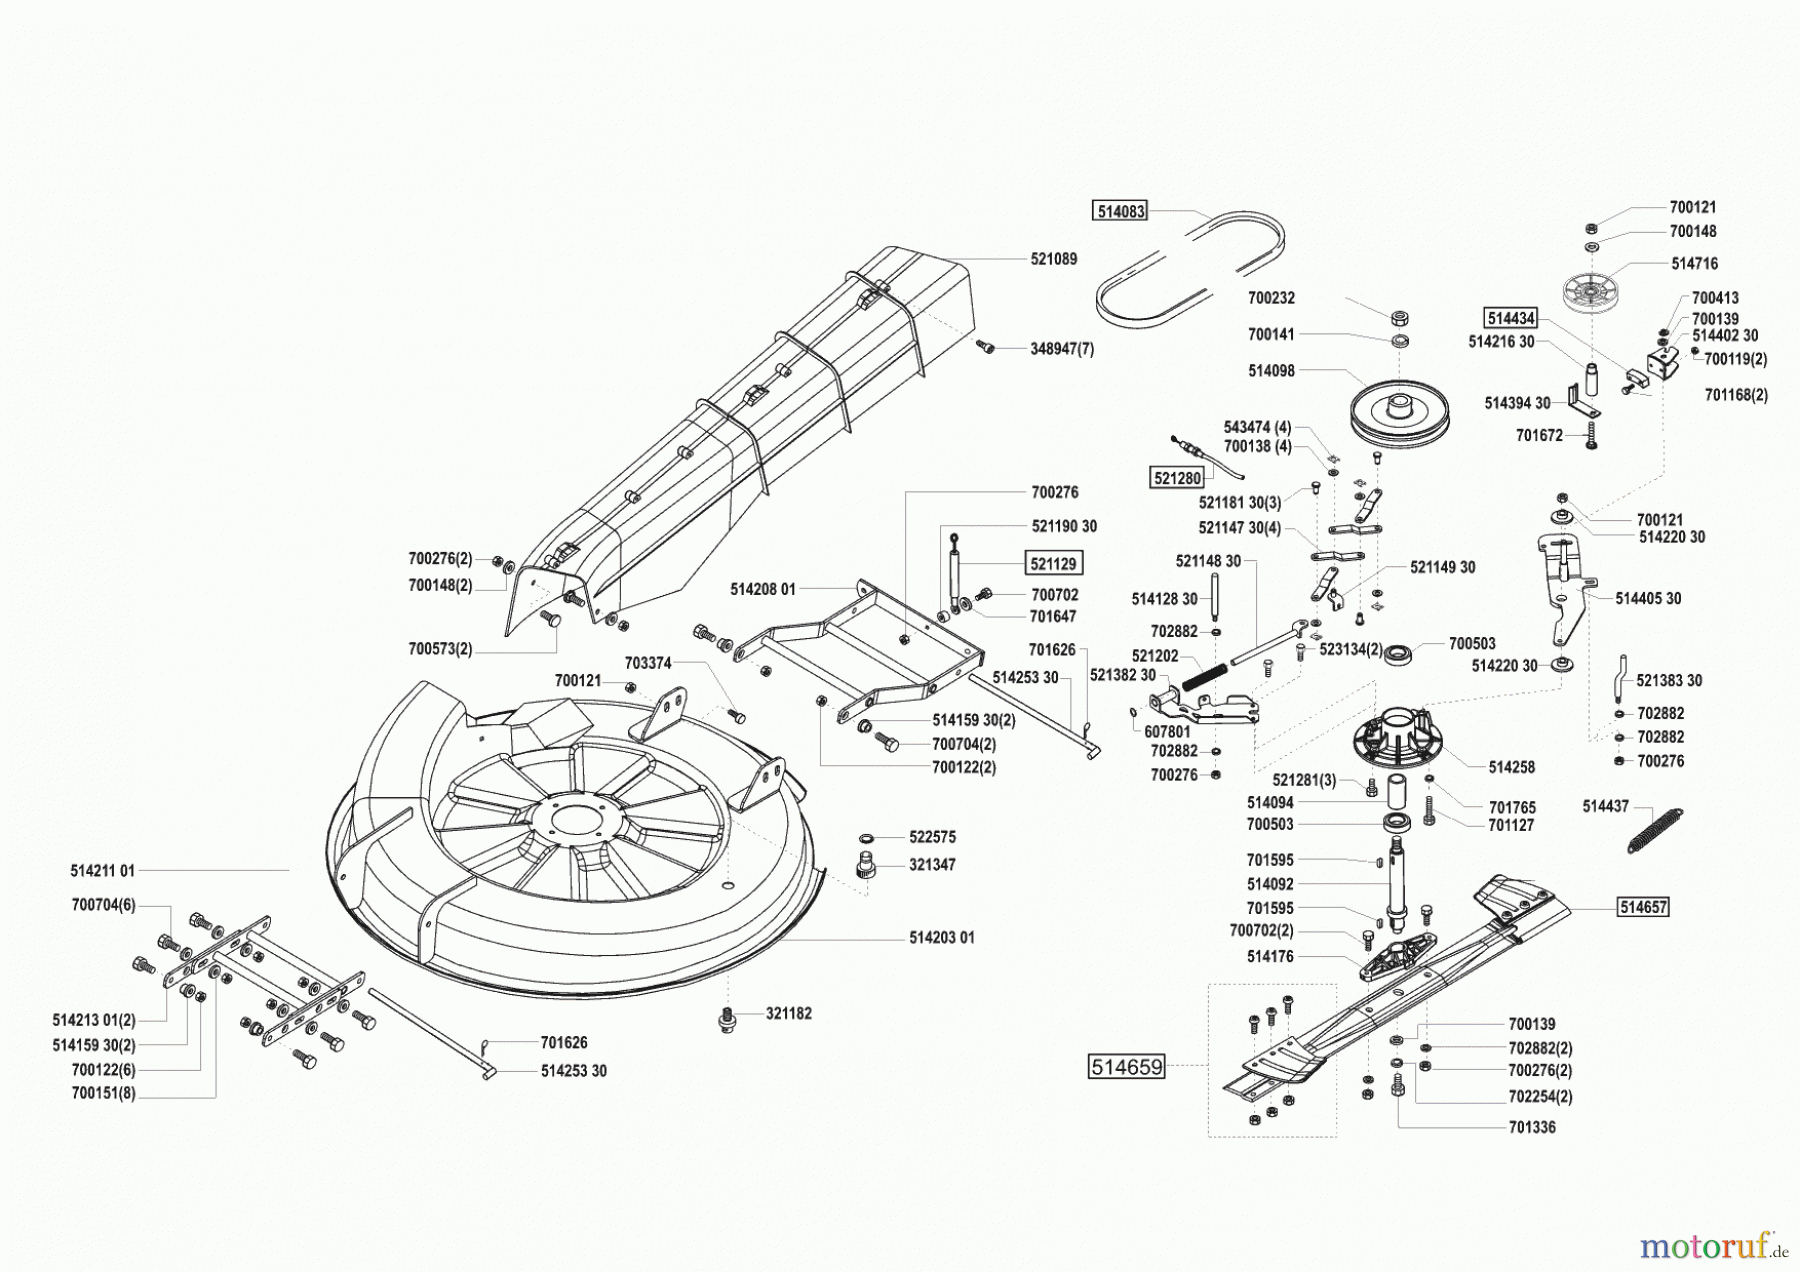  AL-KO Gartentechnik Rasentraktor T 850 ab 02/2002 Seite 5